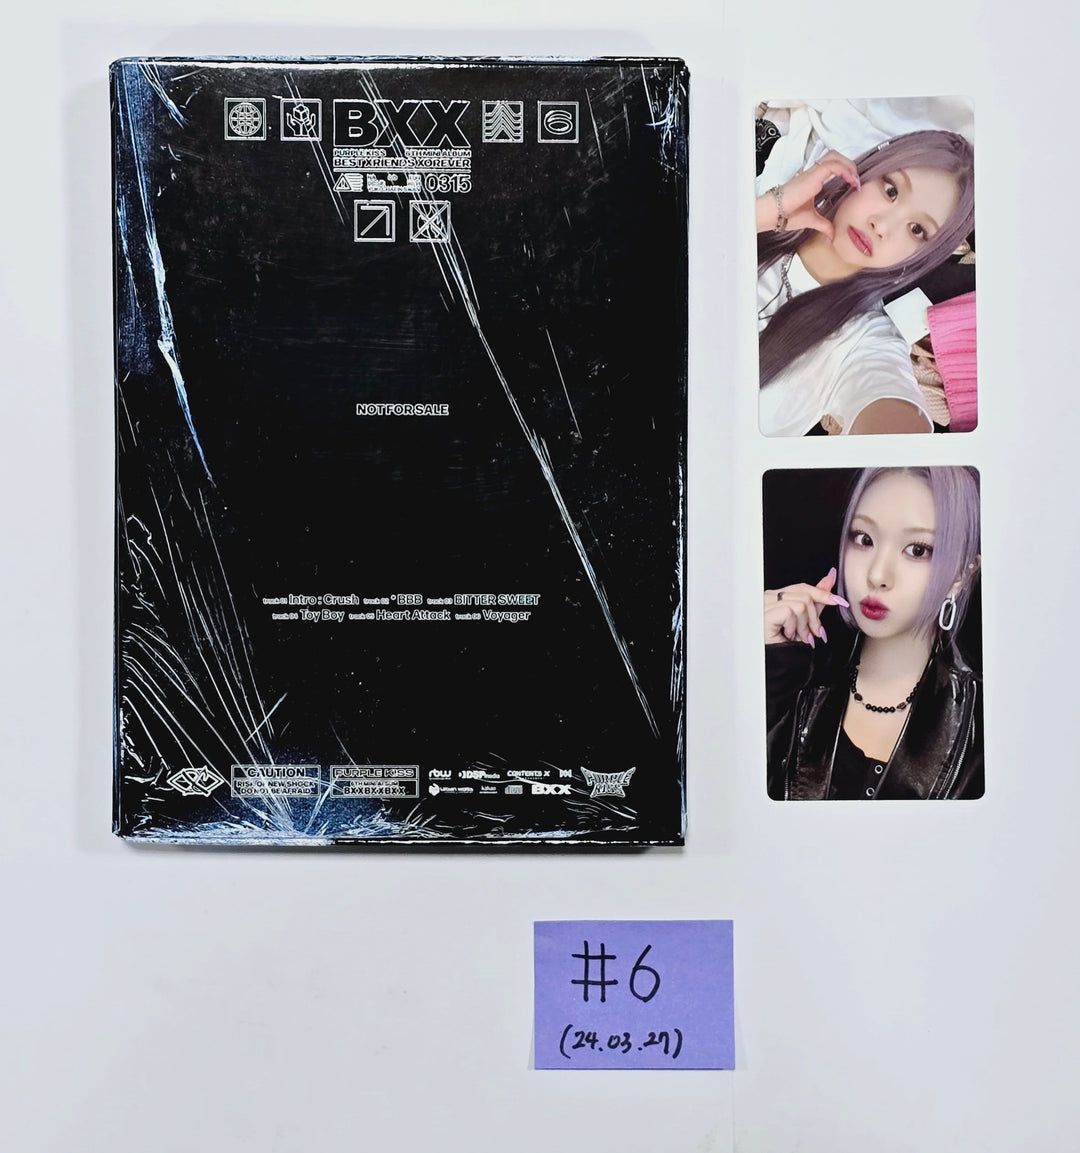 Kim Nam Joo "BAD", WENDY "Wish You Hell", PURPLE KISS "BXX" - Hand Autographed(Signed) Promo Album [24.3.27]